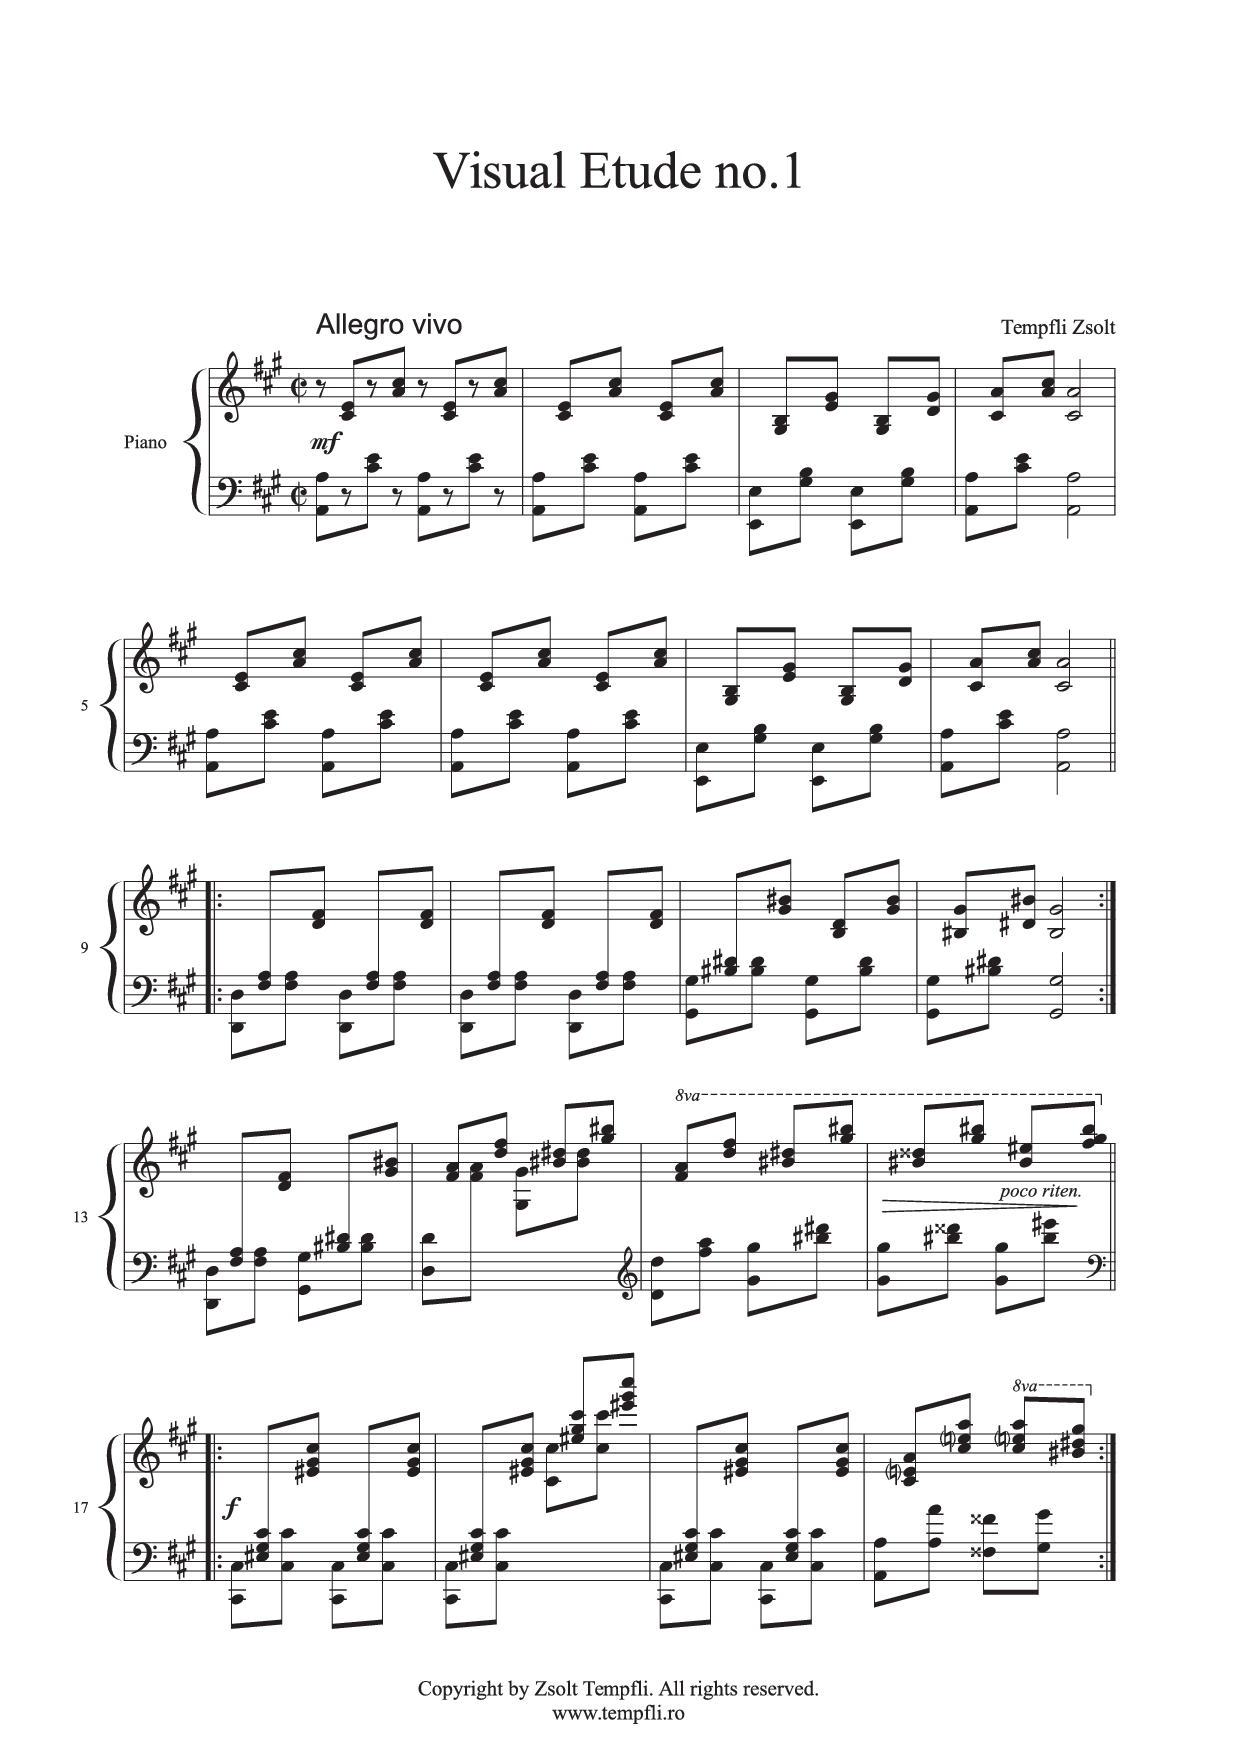 Zsolt Tempfli: Visual Etude no. 1, op. 19 for piano